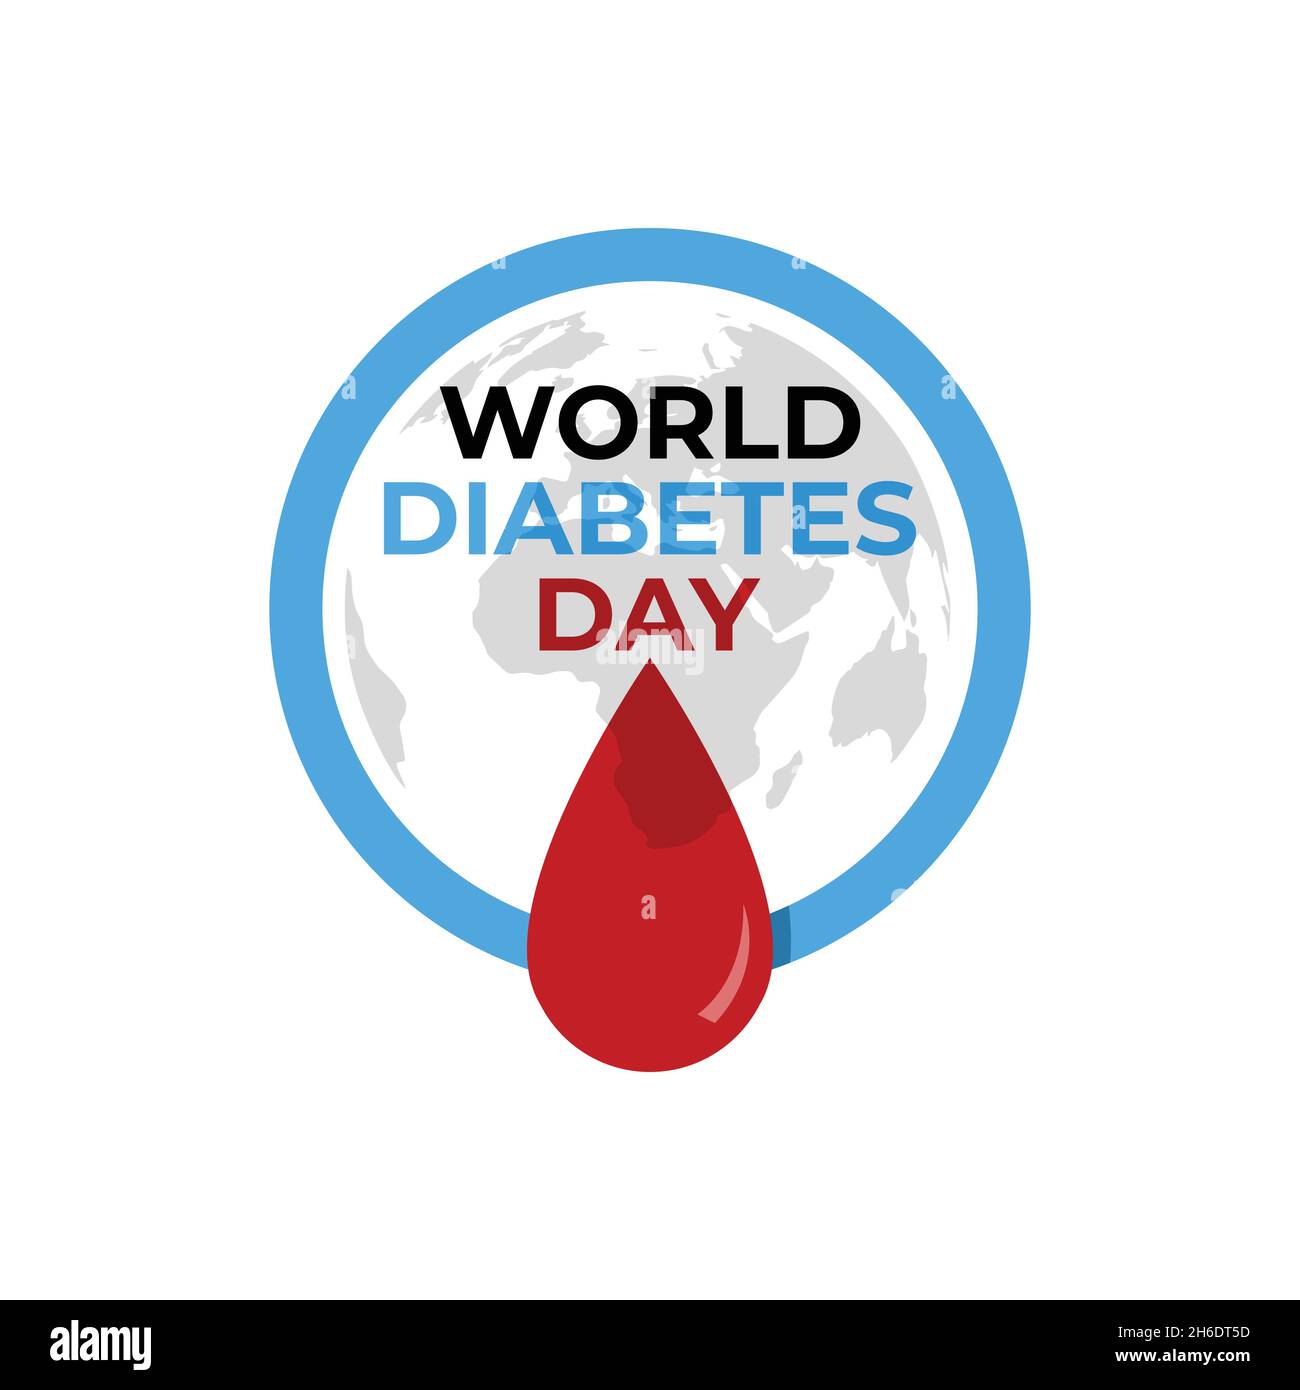 Plakat Design für World Diabetes Day Free Vector. Vector Illustration der Welt Diabetes Tag Konzept Stock Vektor